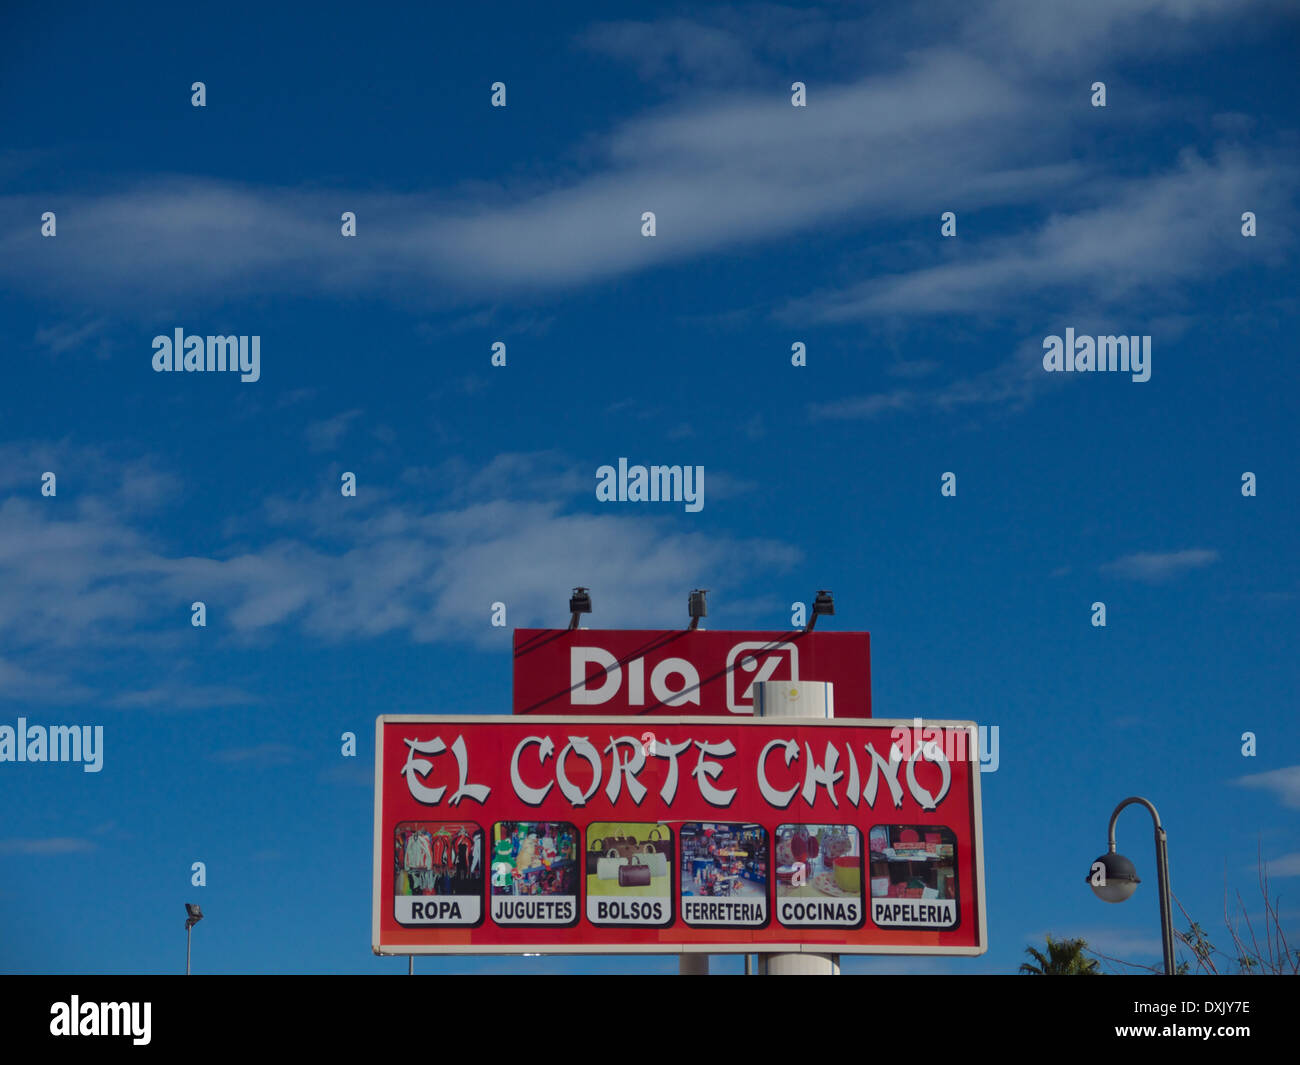 Supermarket sign for El Corte Chino in Benidorm, Spain Stock Photo - Alamy